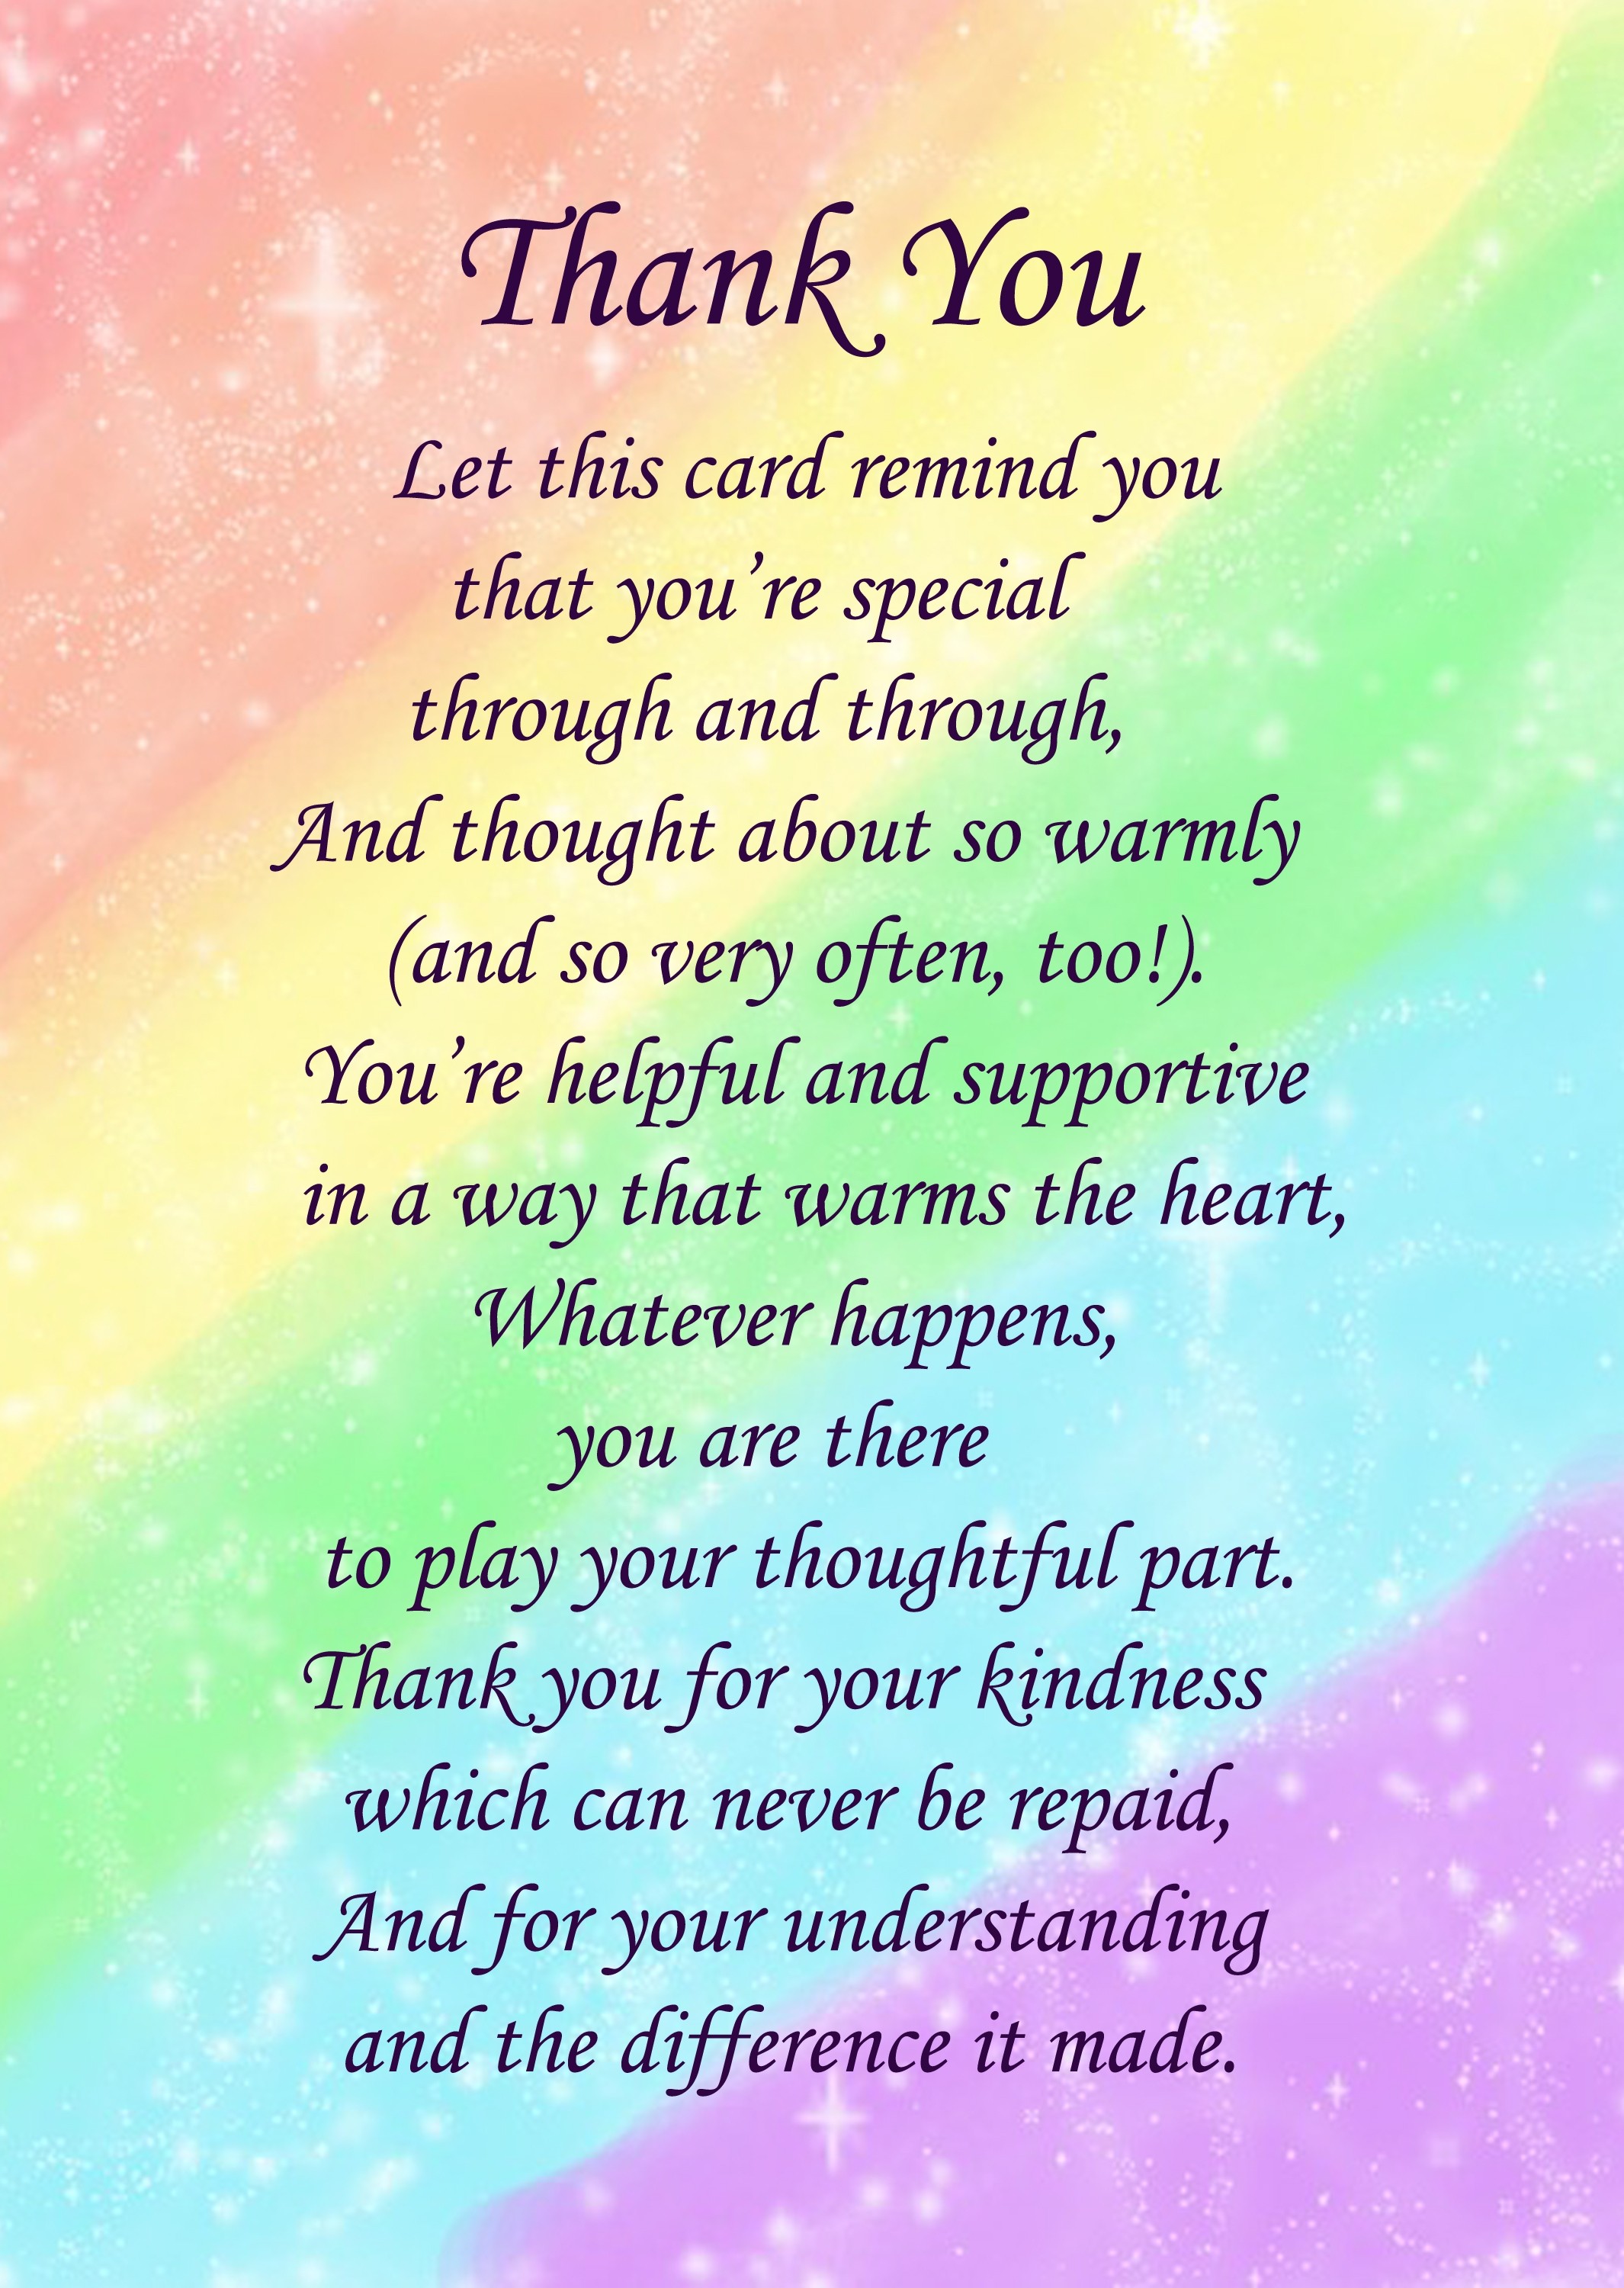 Thank You Verse Poem Card